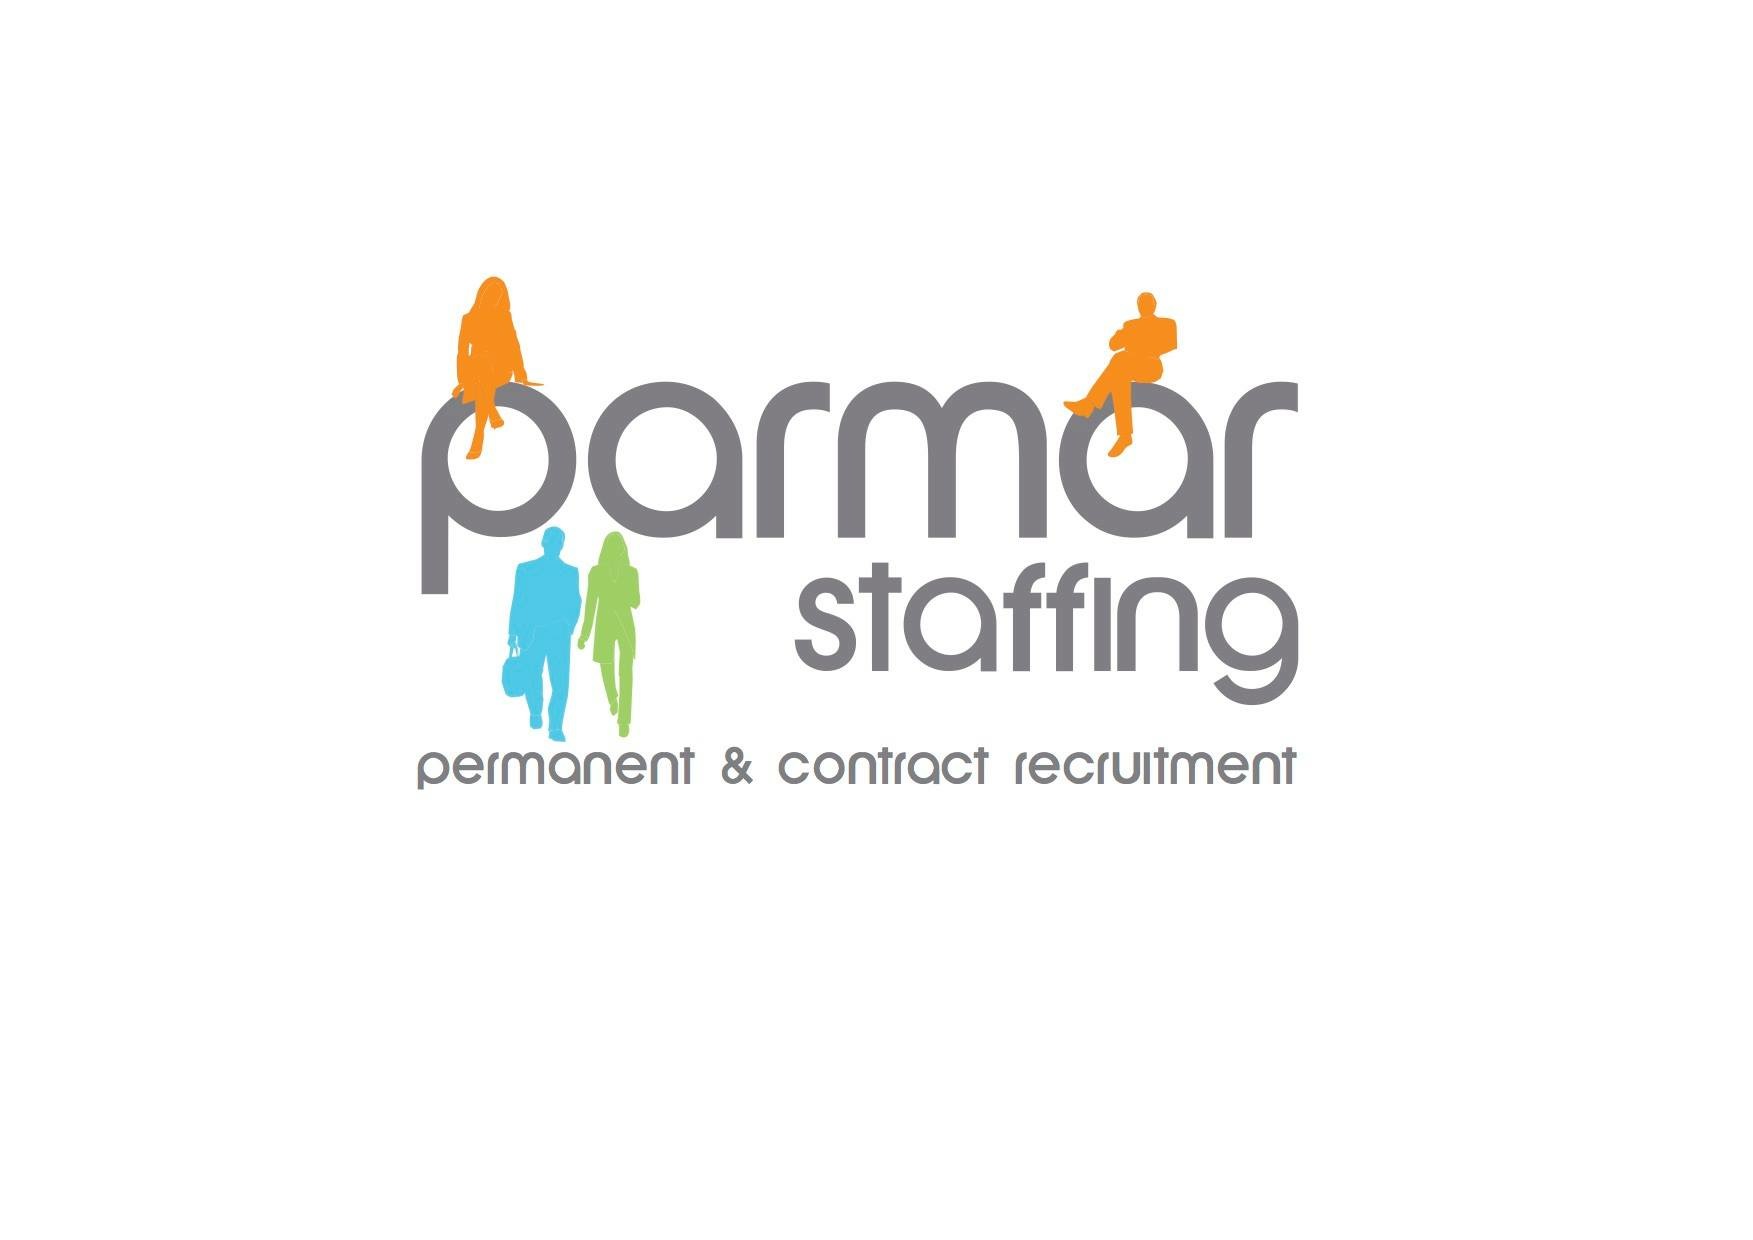 https://campaign-image.com/zohocampaigns/611634000000678004_zc_v14_parmar_staffing_logo_.jpg